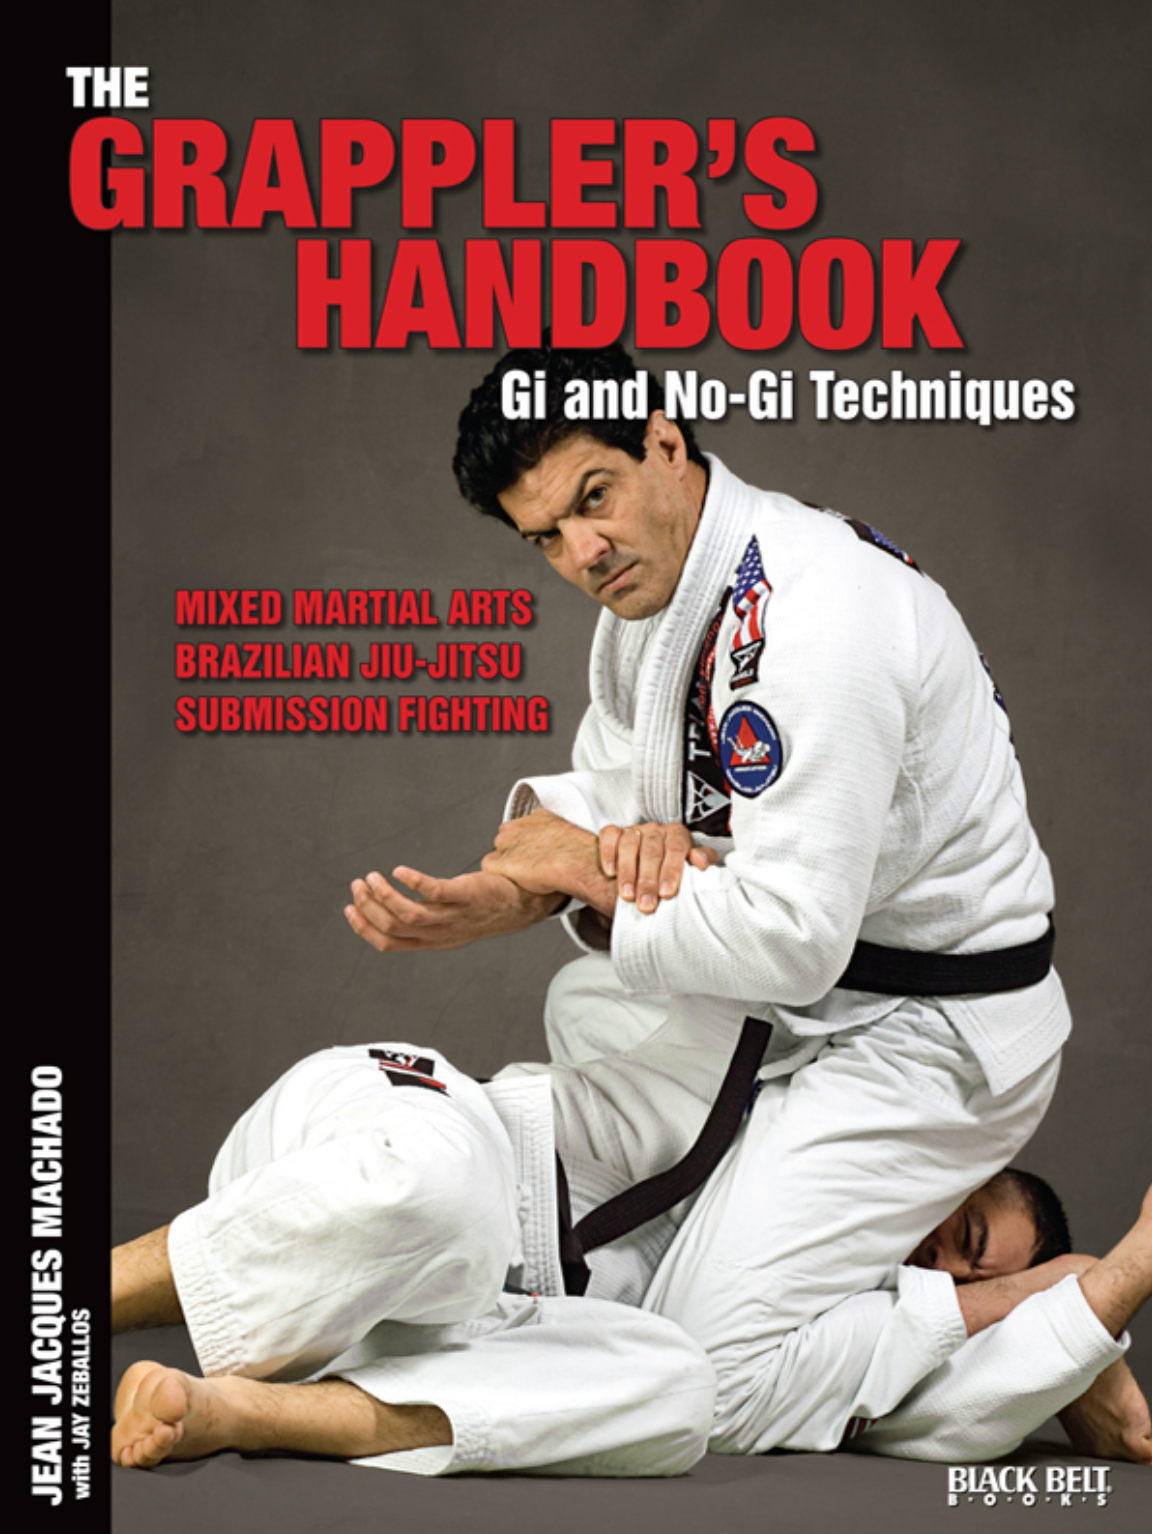 The Grappler's Handbook 1 Libro de técnicas de Gi y Nogi de Jean Jacques Machado (usado) 